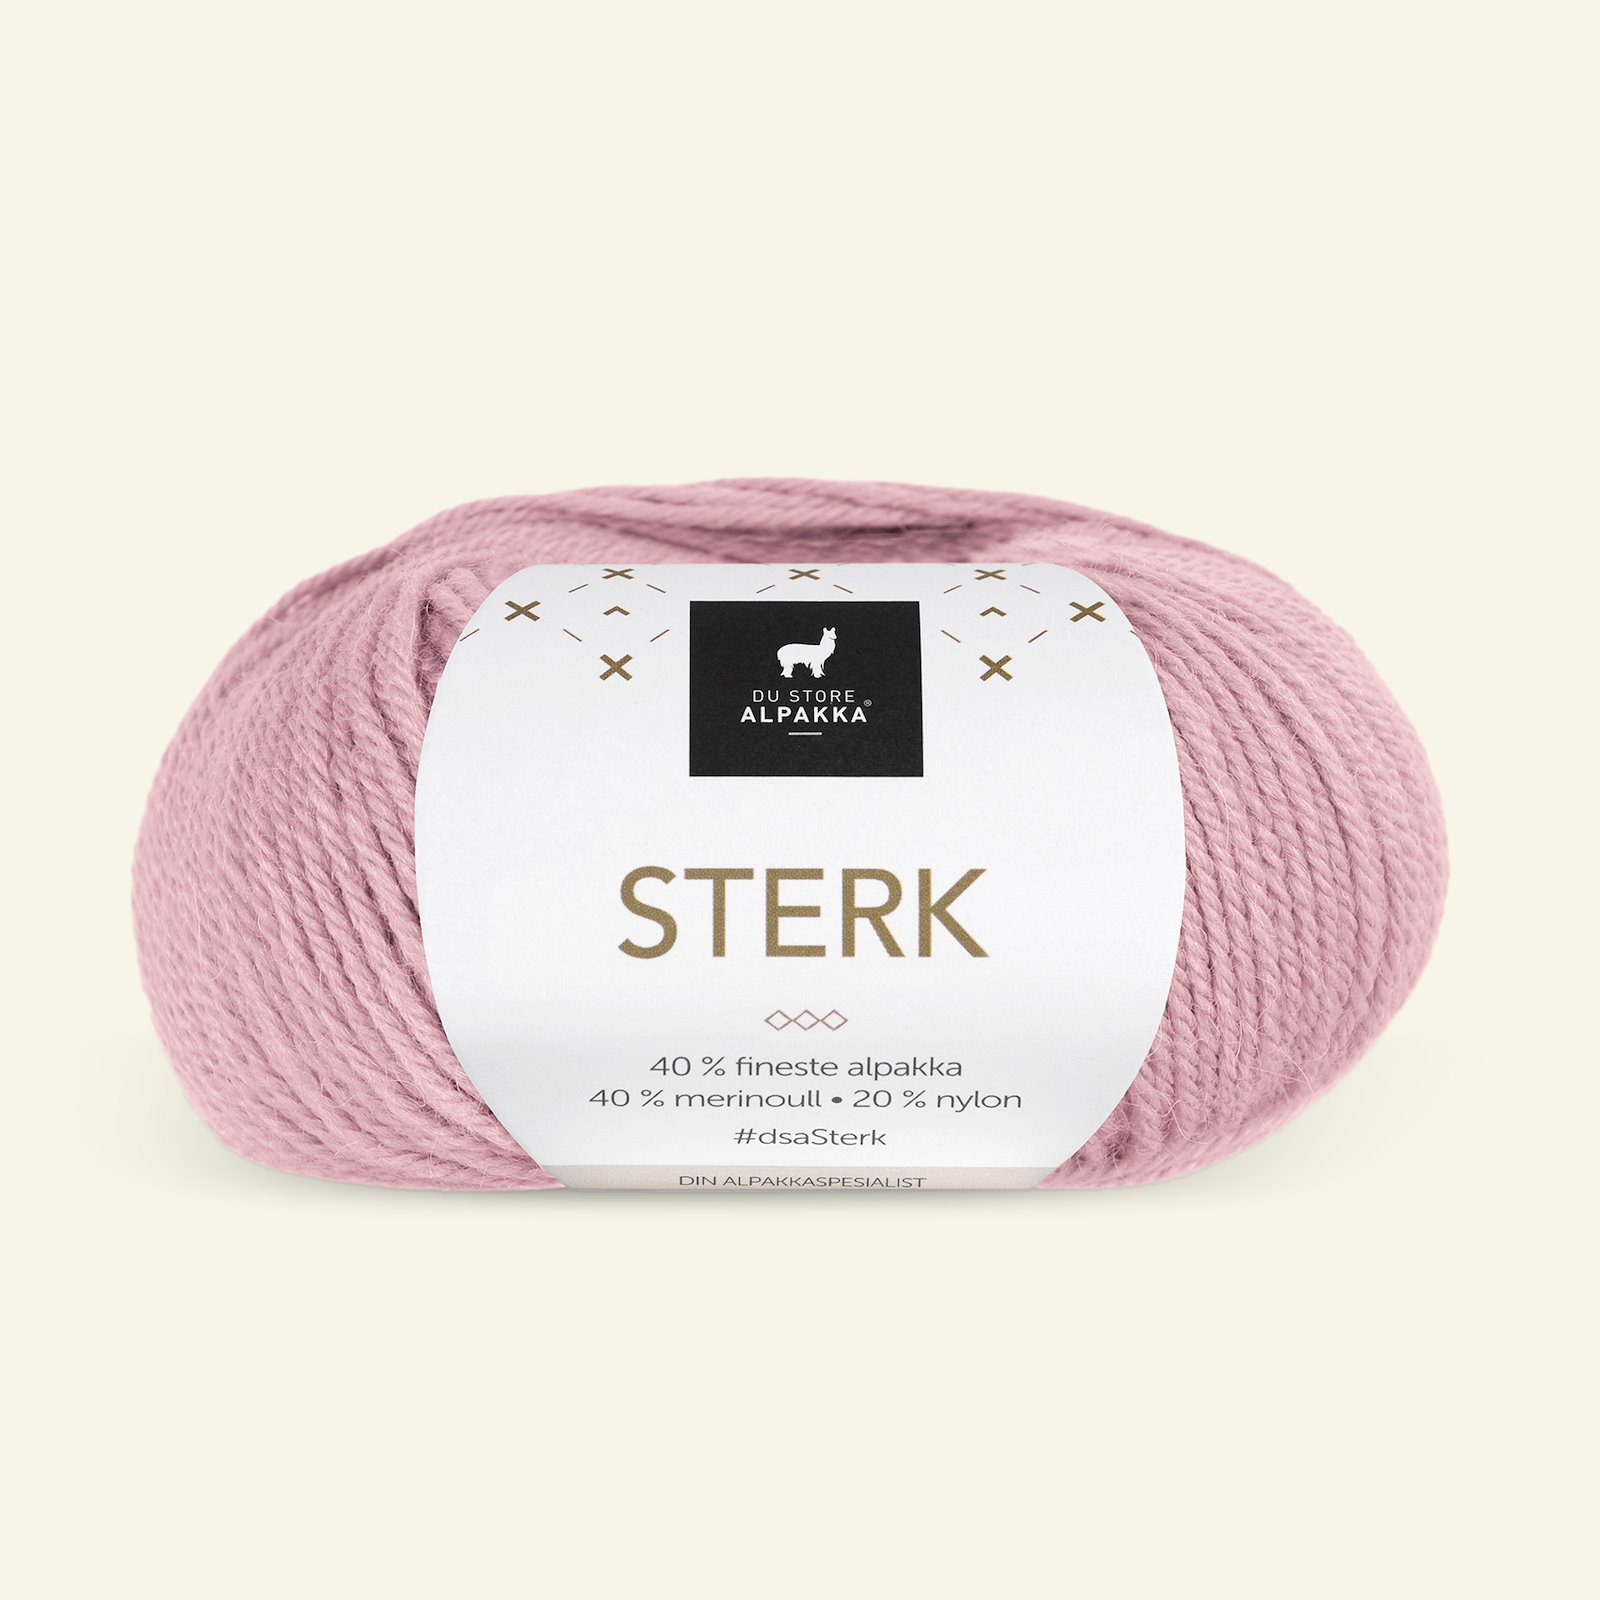 Du Store Alpakka, Alpaka merino Mischgarn "Sterk", staubiges rosa (850) 90000676_pack